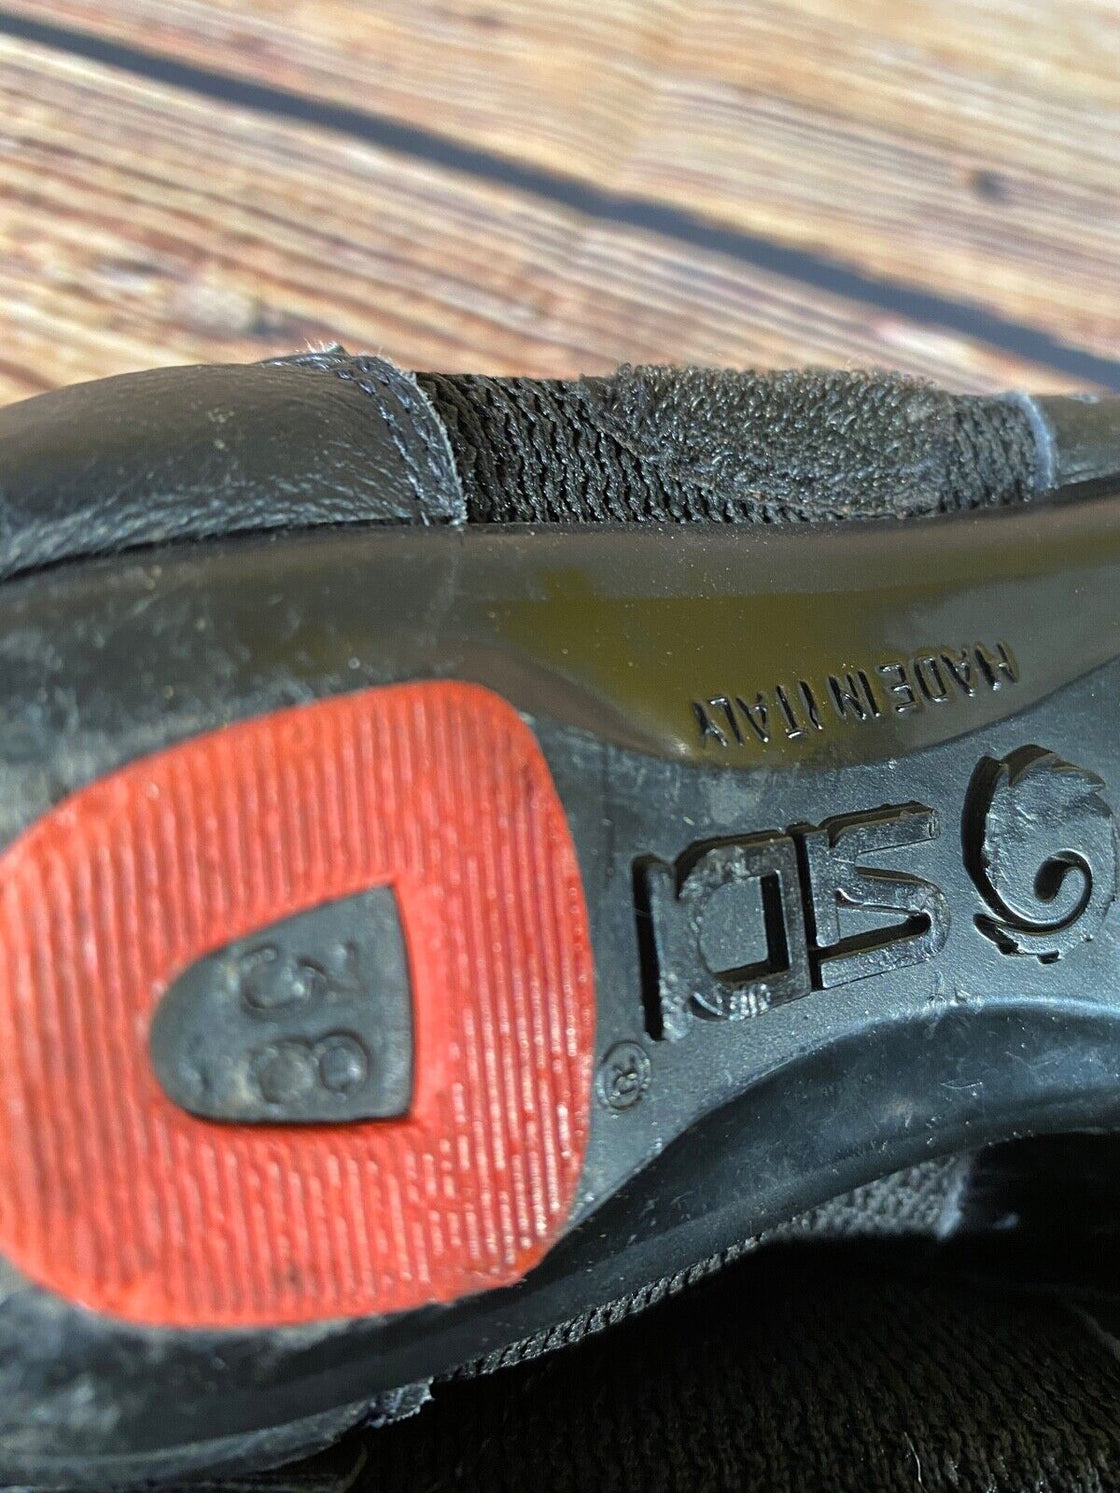 SIDI Vintage Road Cycling Shoes Biking Boots Size EU38, US5, Mondo 228 RARE